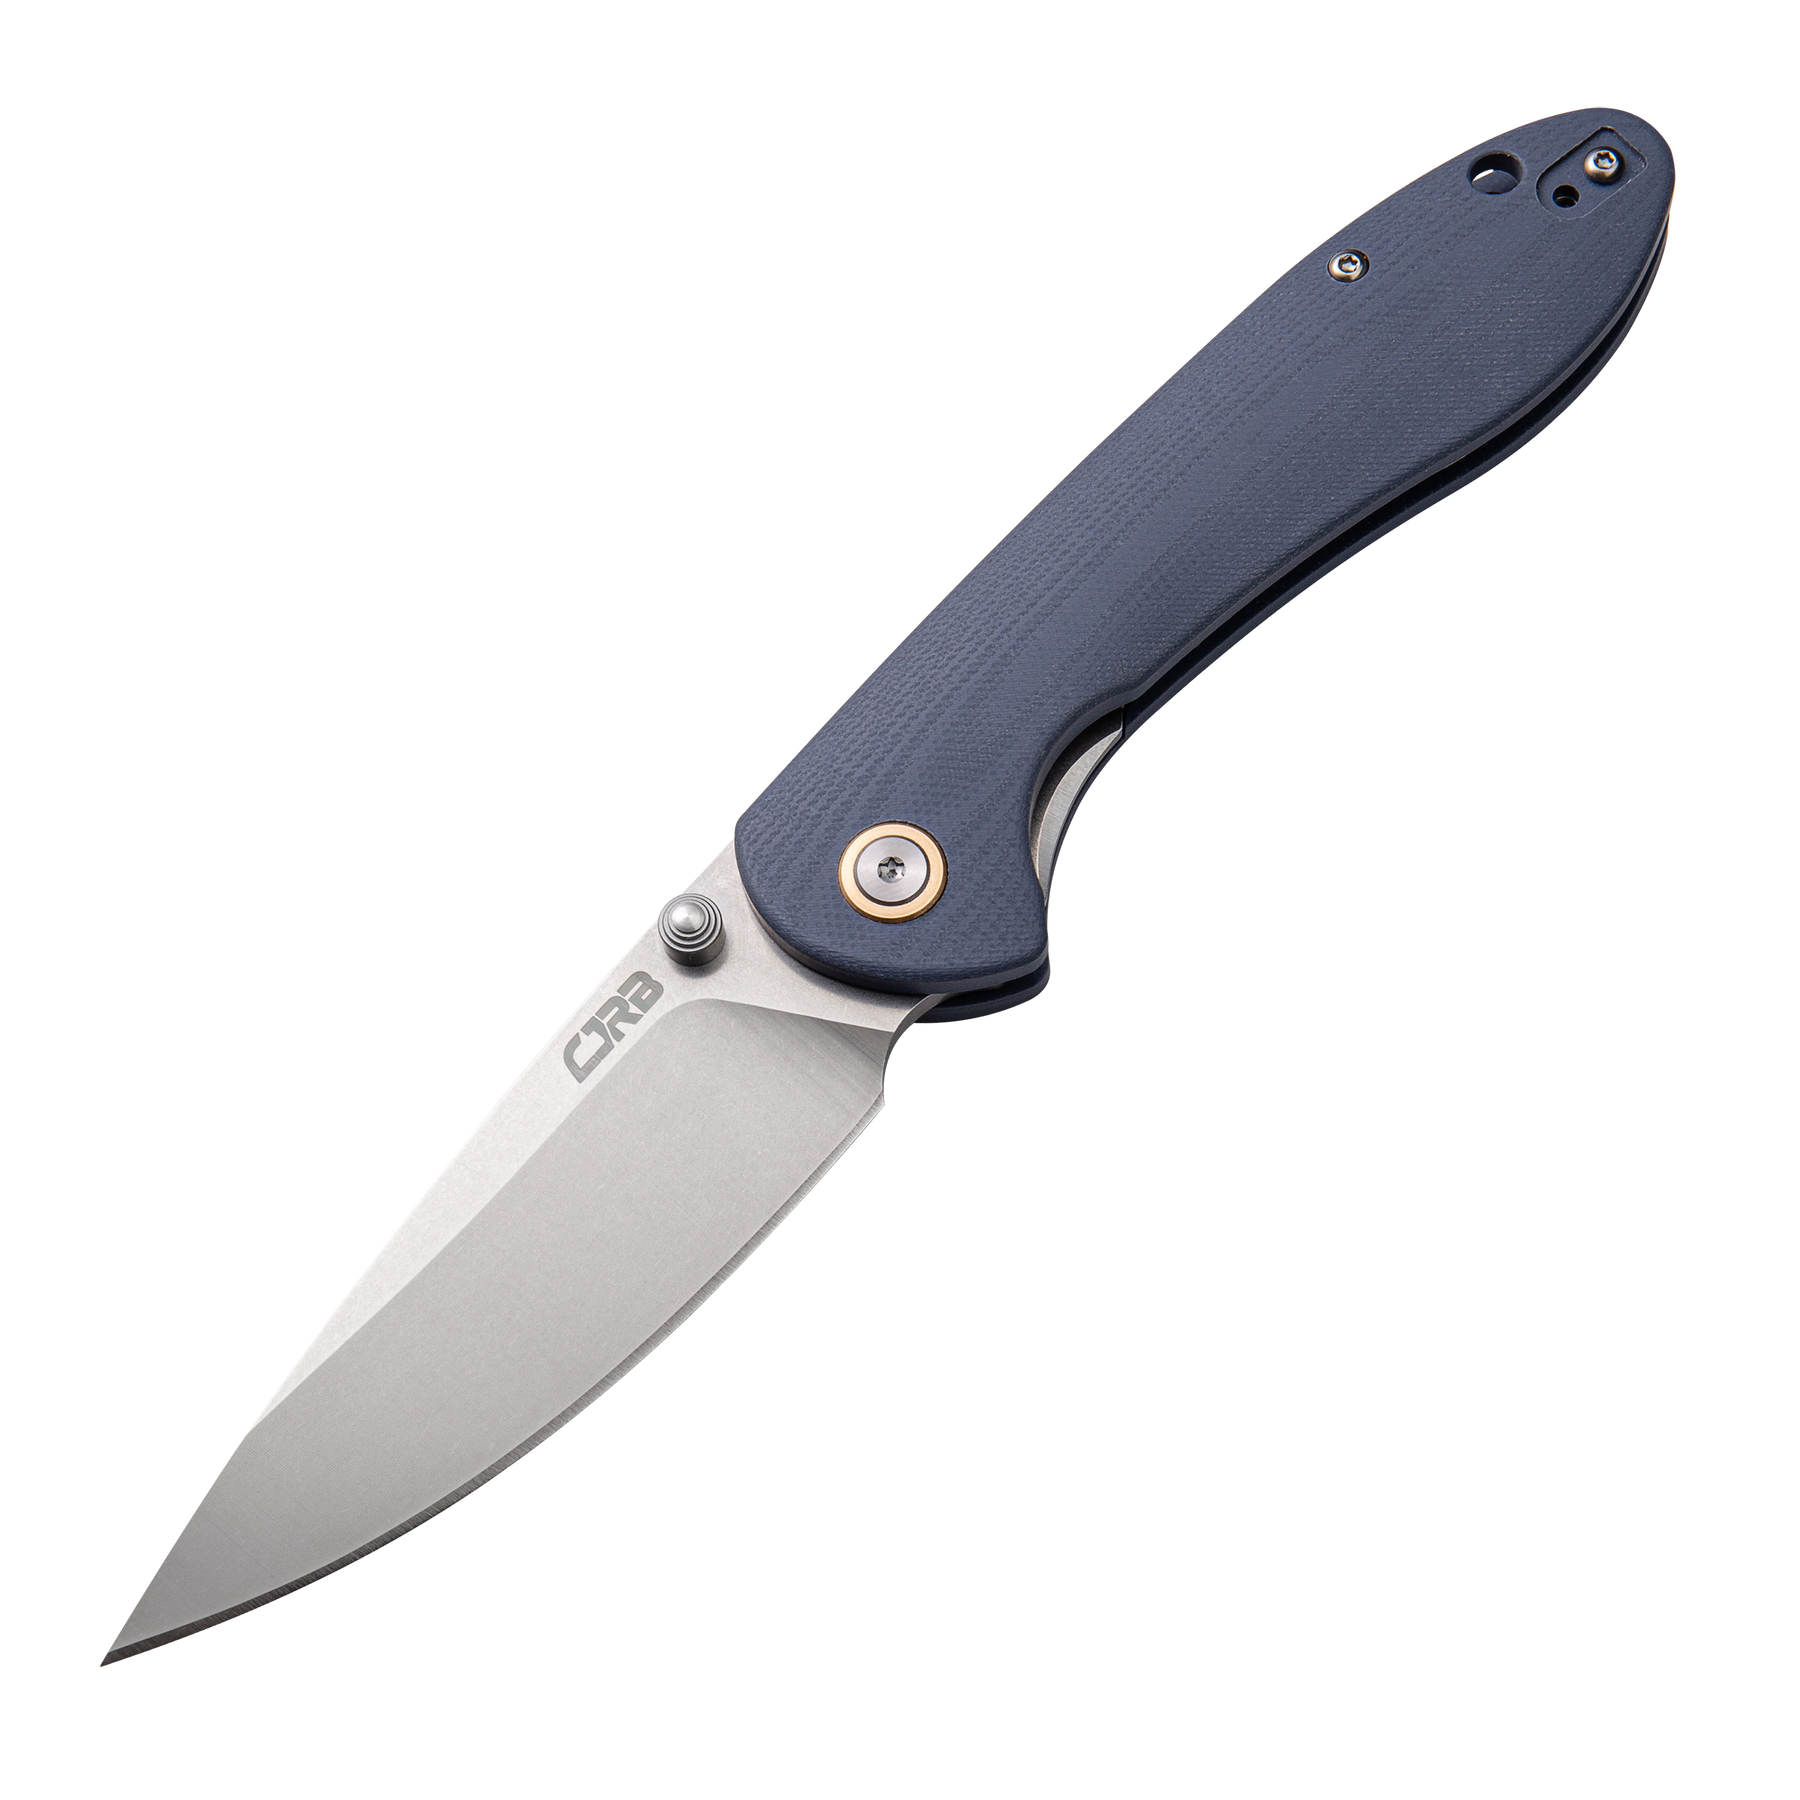 CJRB Feldspar J1912 D2 Blade G10(contoured & CNC pattern texture) Handle Folding Knives